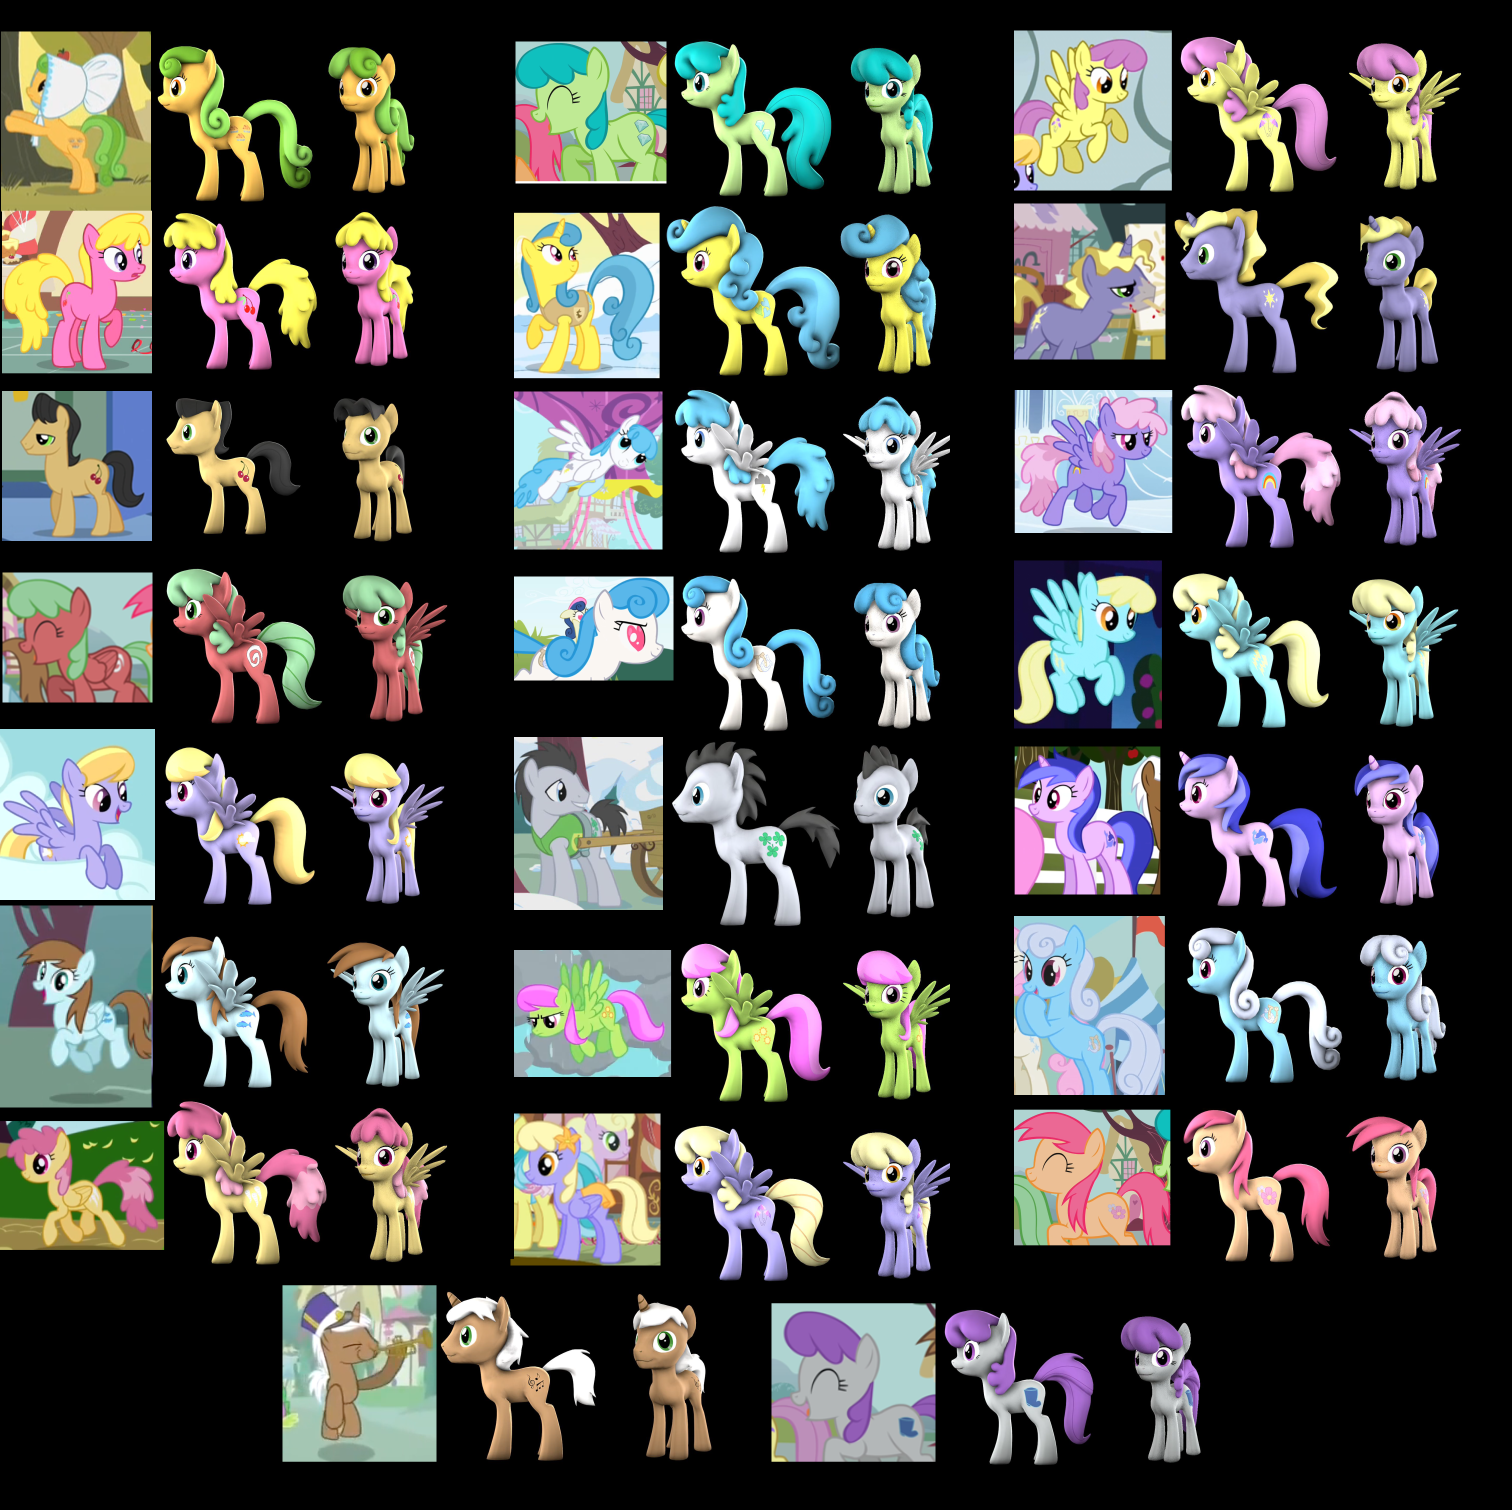 [SFM/DL] Background Pony Expansion Pack